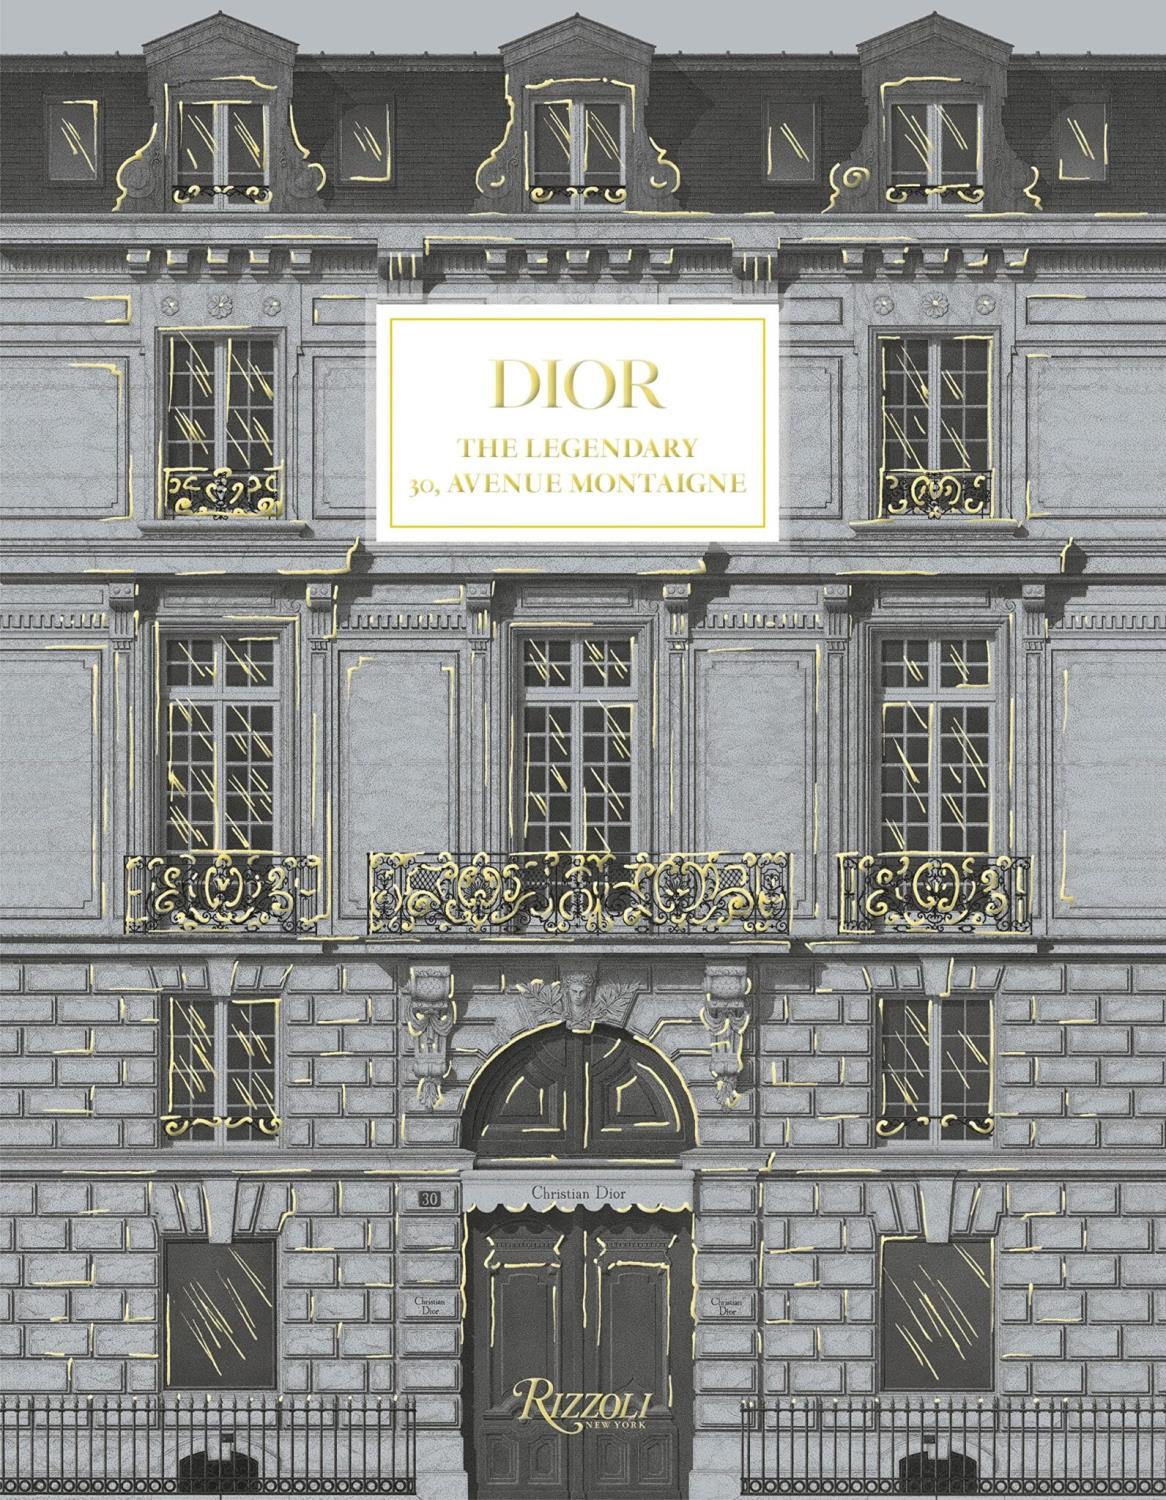 Dior The Legendary 30 Avenue Montagne